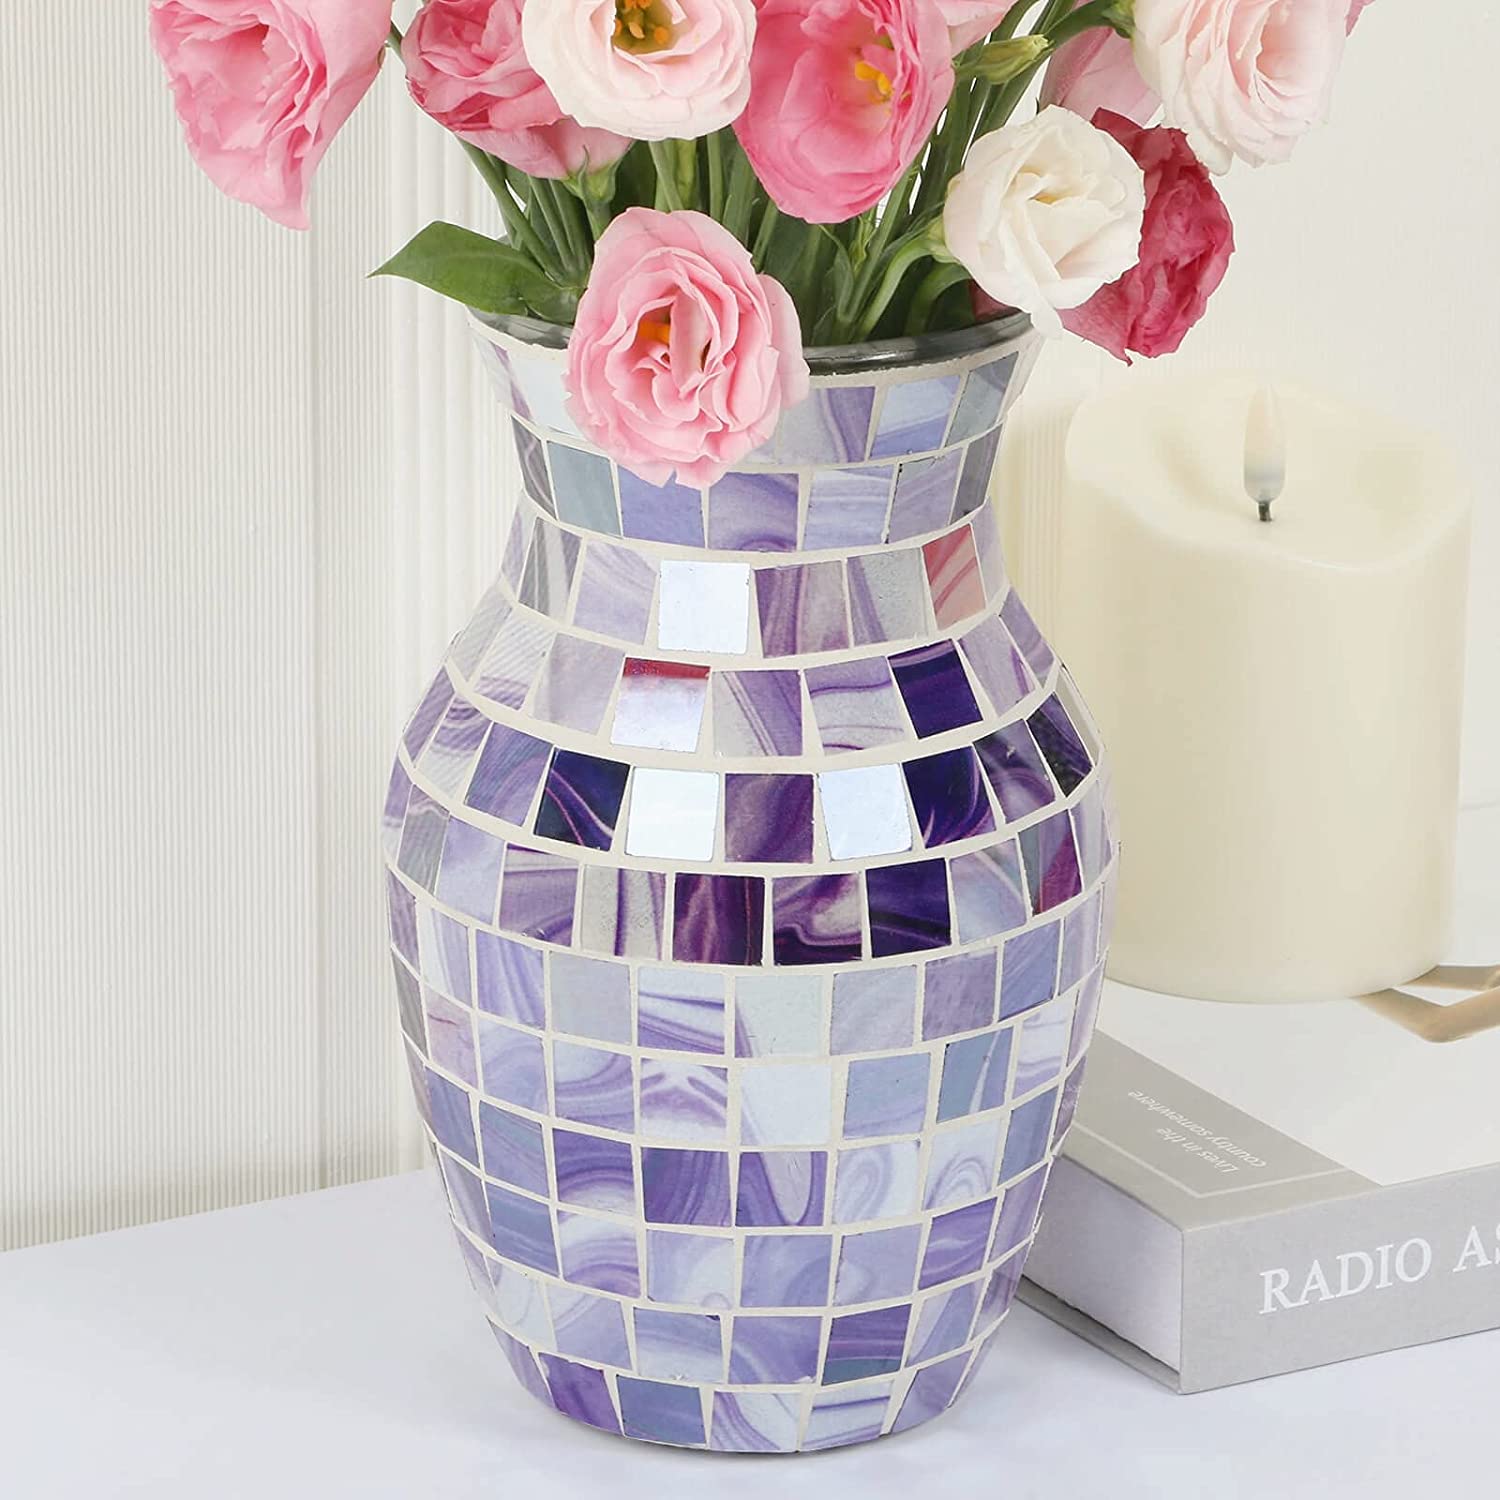 Pink Vases for Decor, Flower Vase for Living Room Decorations, Mosaic Marble Vas